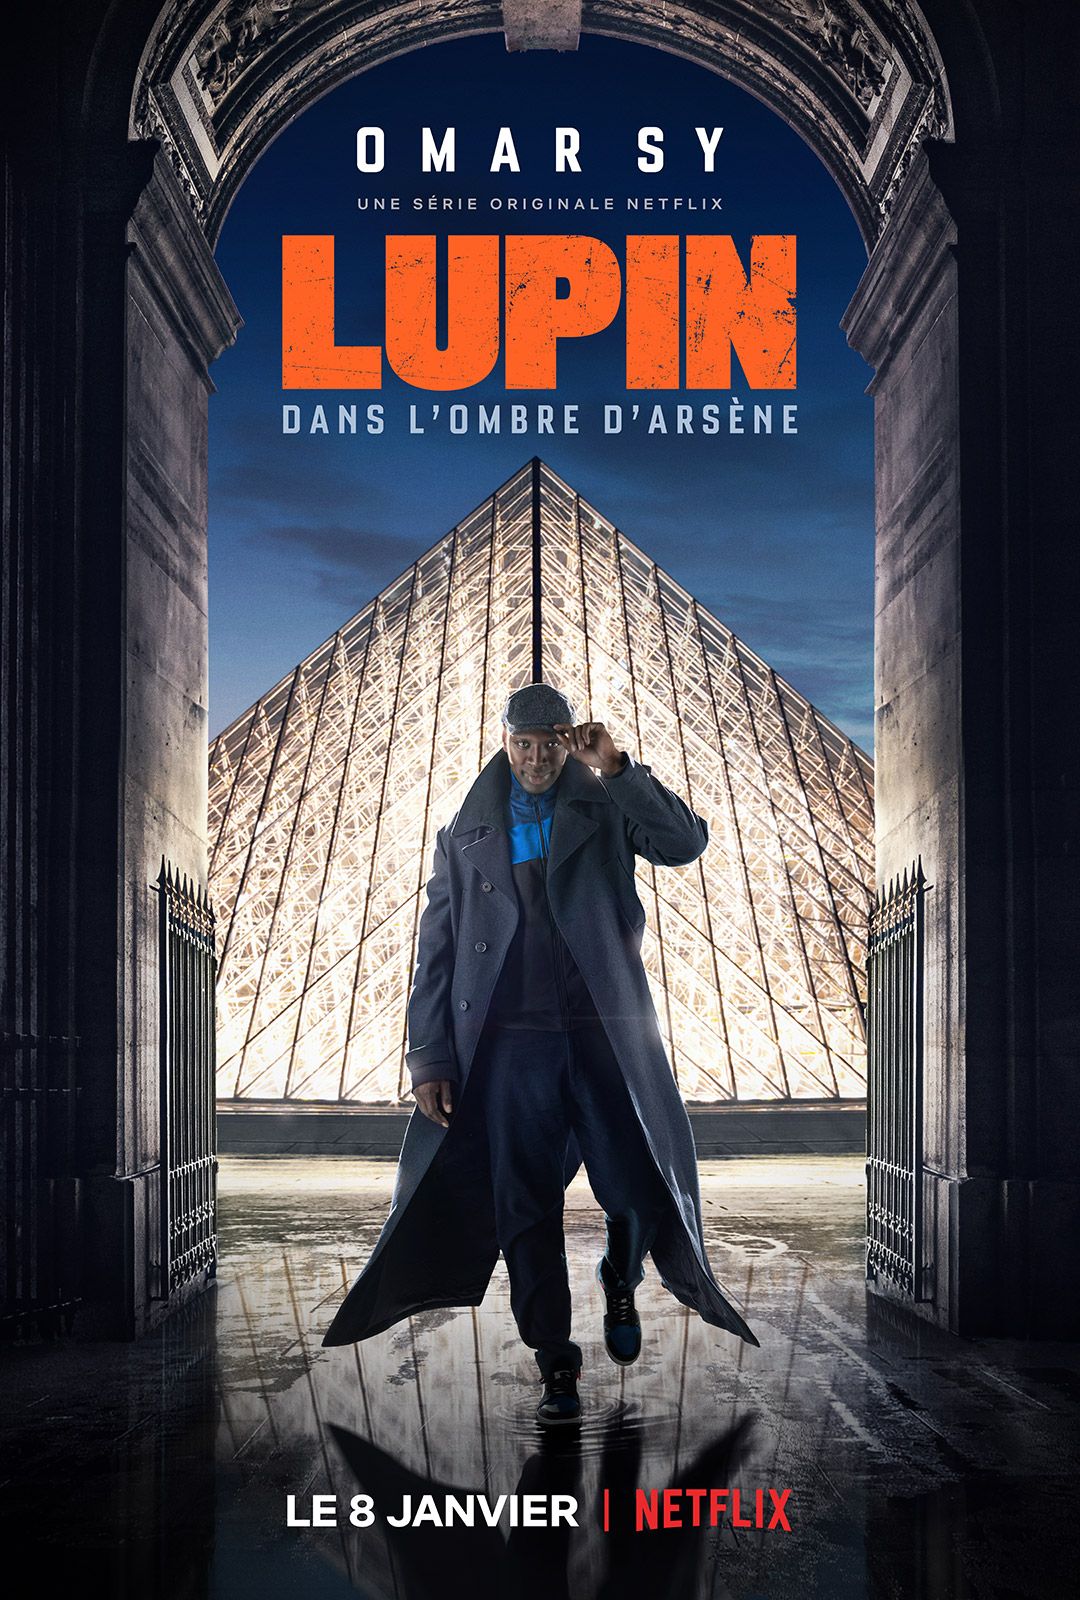  Download film lupin 2021 